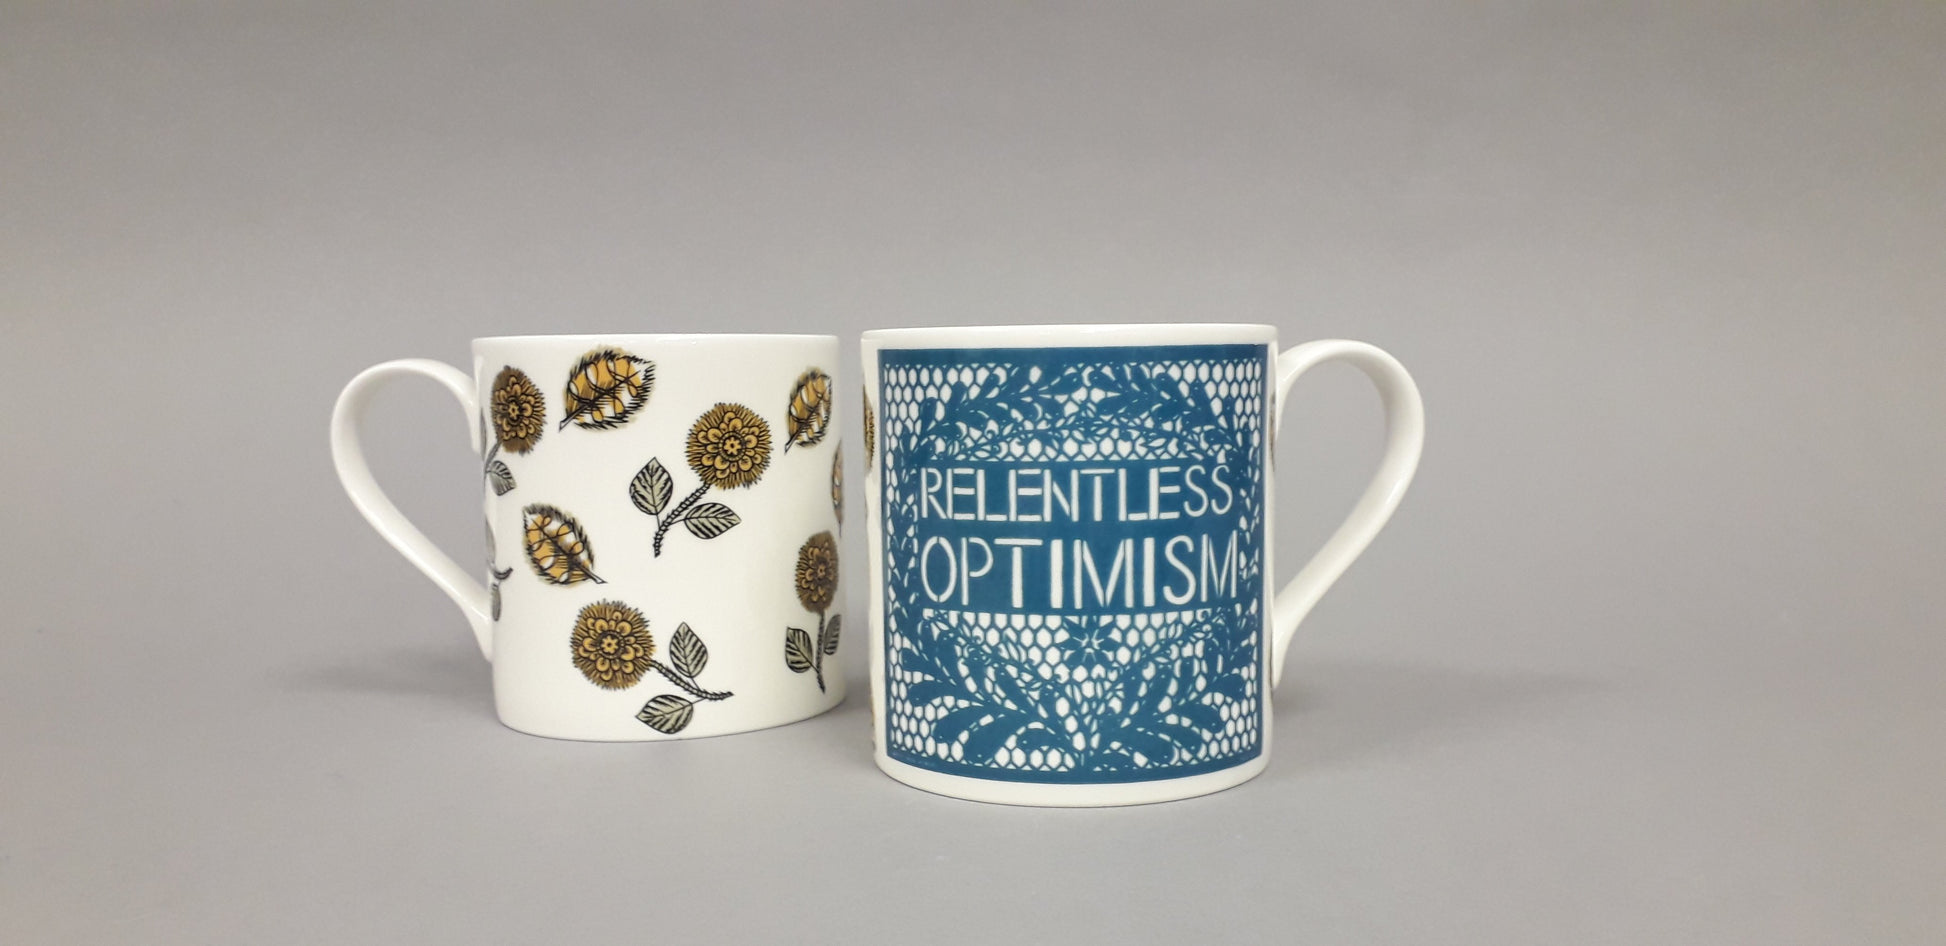 Relentless Optimism bone china mug.  Made in Bristol by Stokes Croft China.